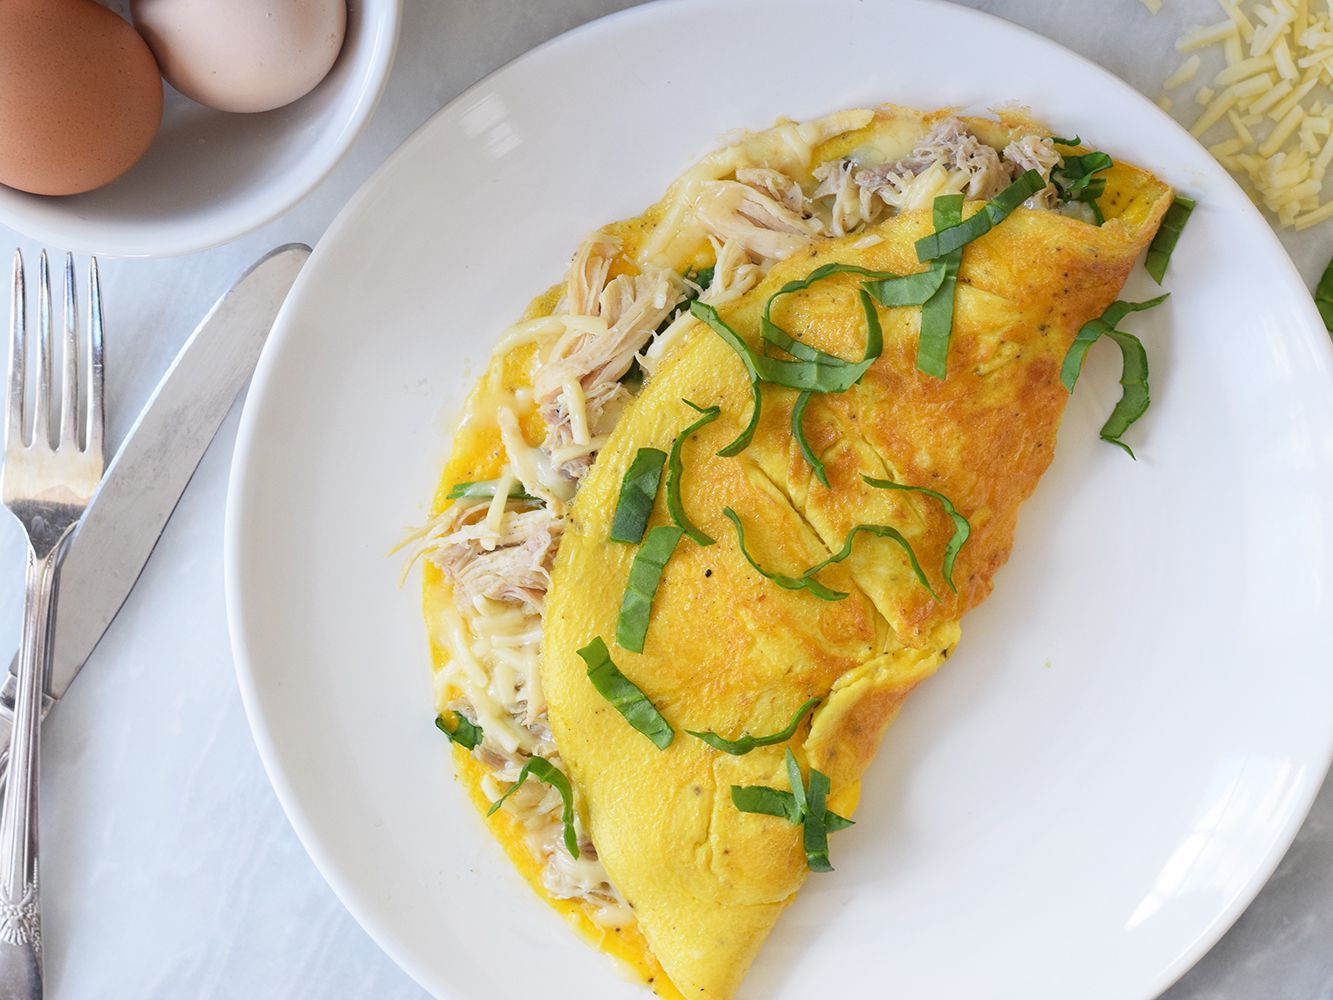 Egg, poultry, omlet Image